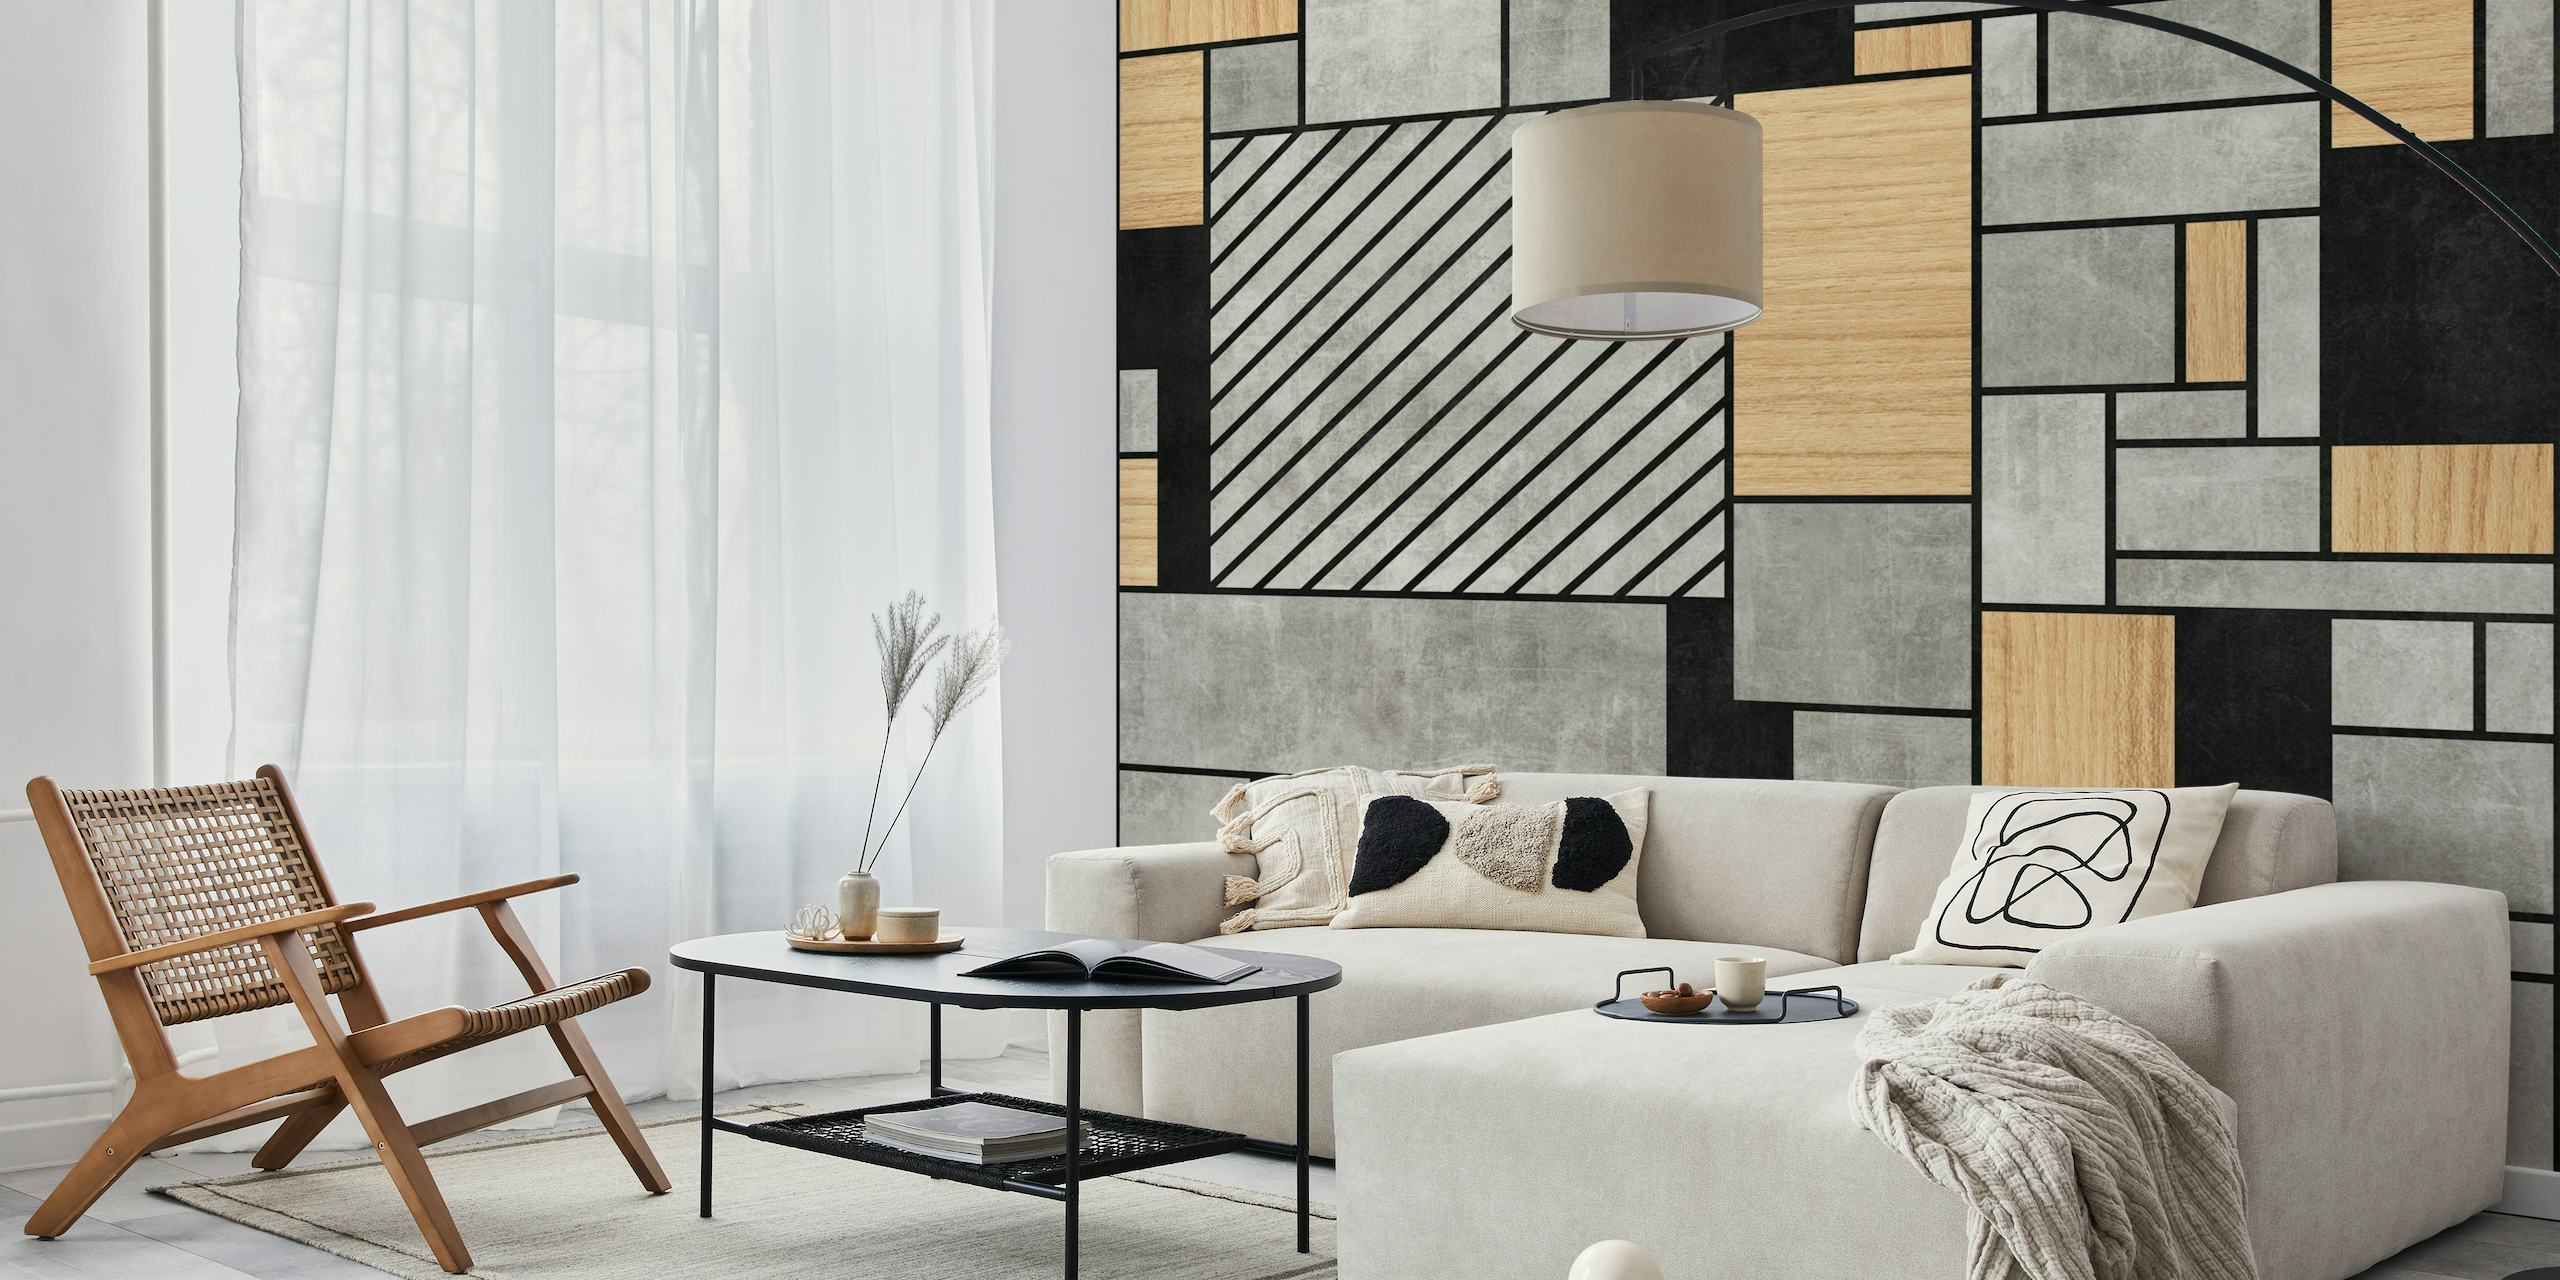 Fototapeta s abstraktním náhodným vzorem s texturami betonu a dřeva pro moderní interiéry